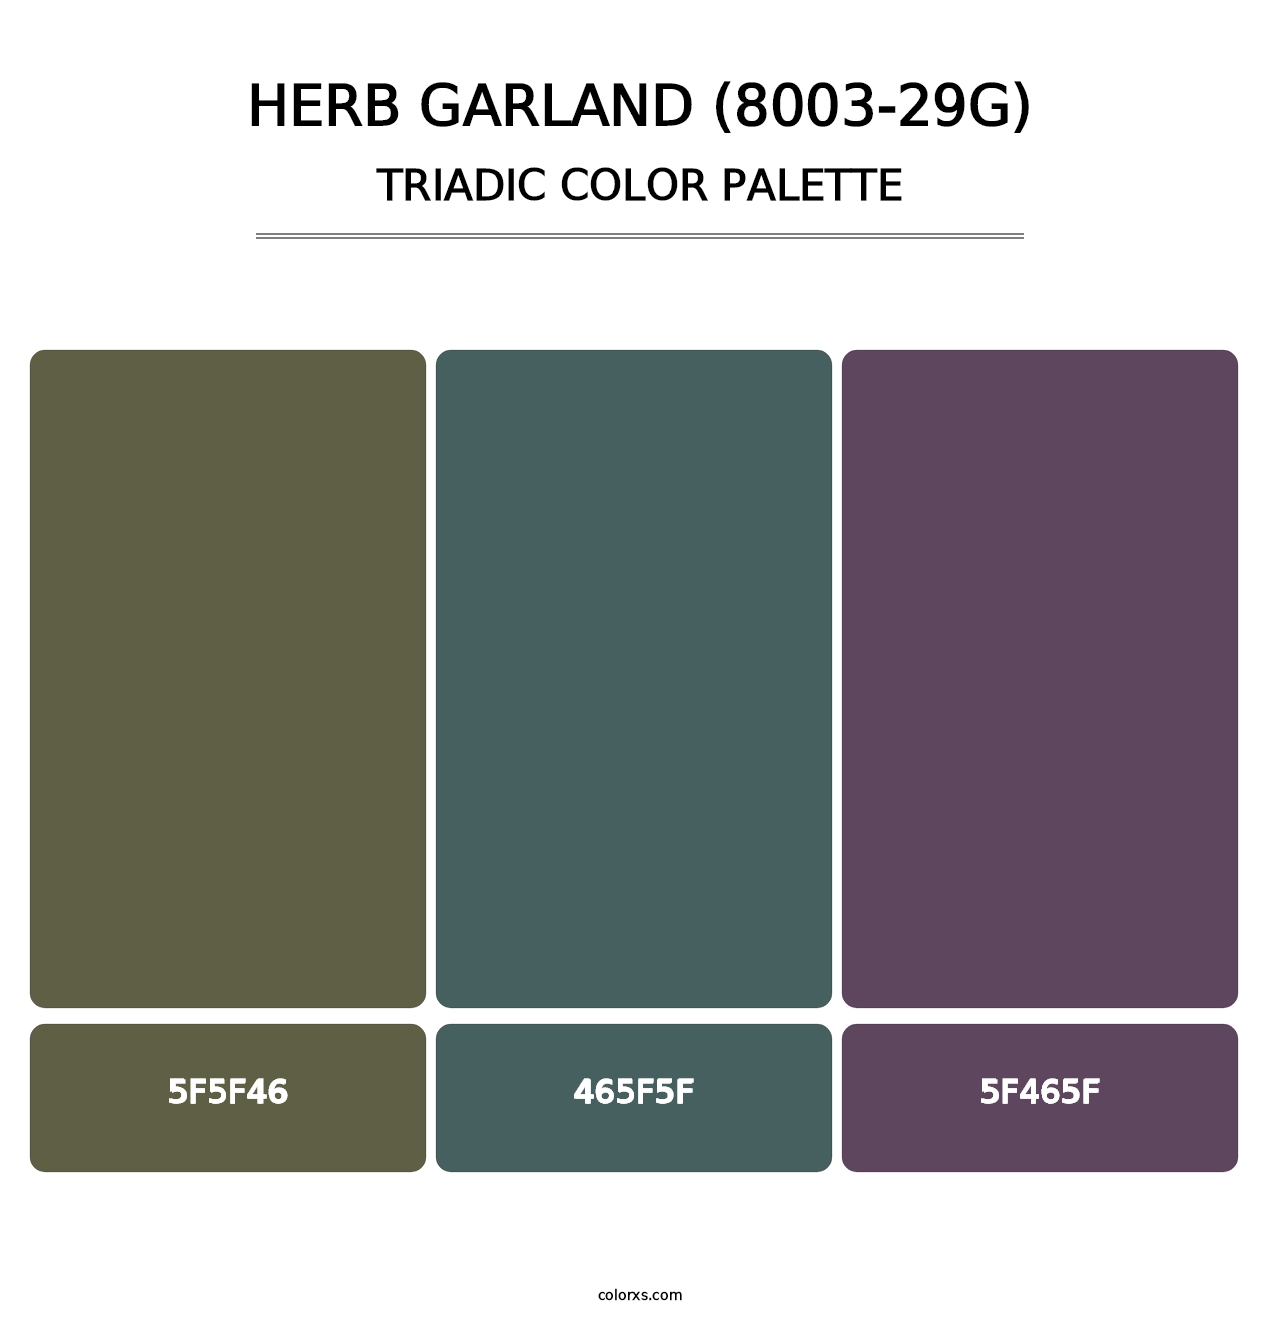 Herb Garland (8003-29G) - Triadic Color Palette